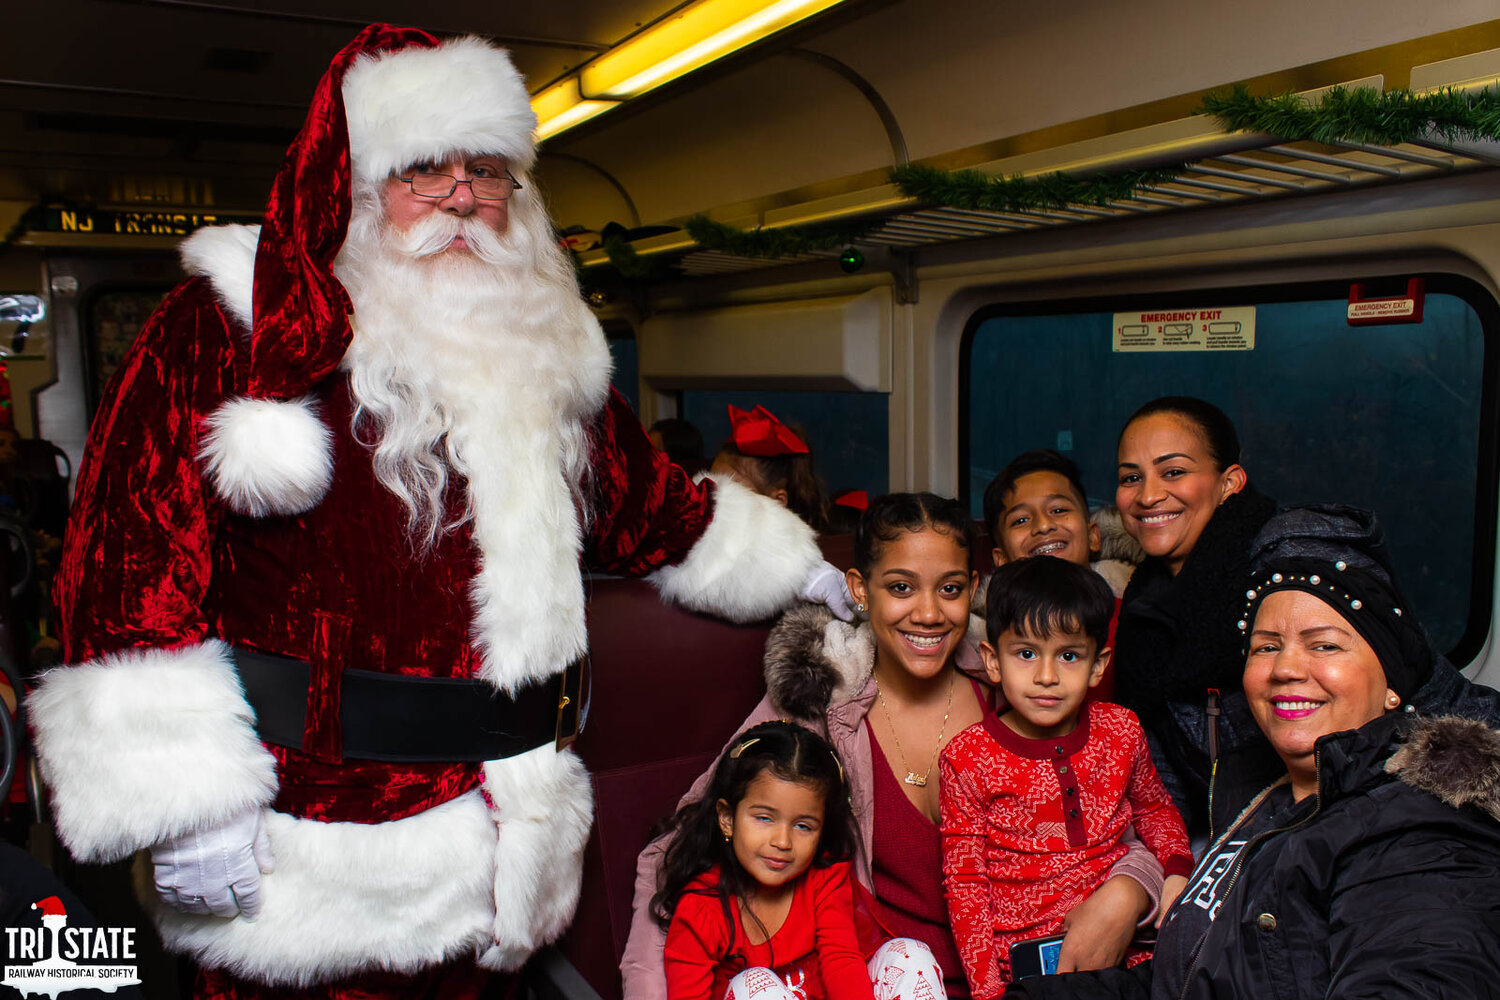 The Santa Train in Wayne, New Jersey